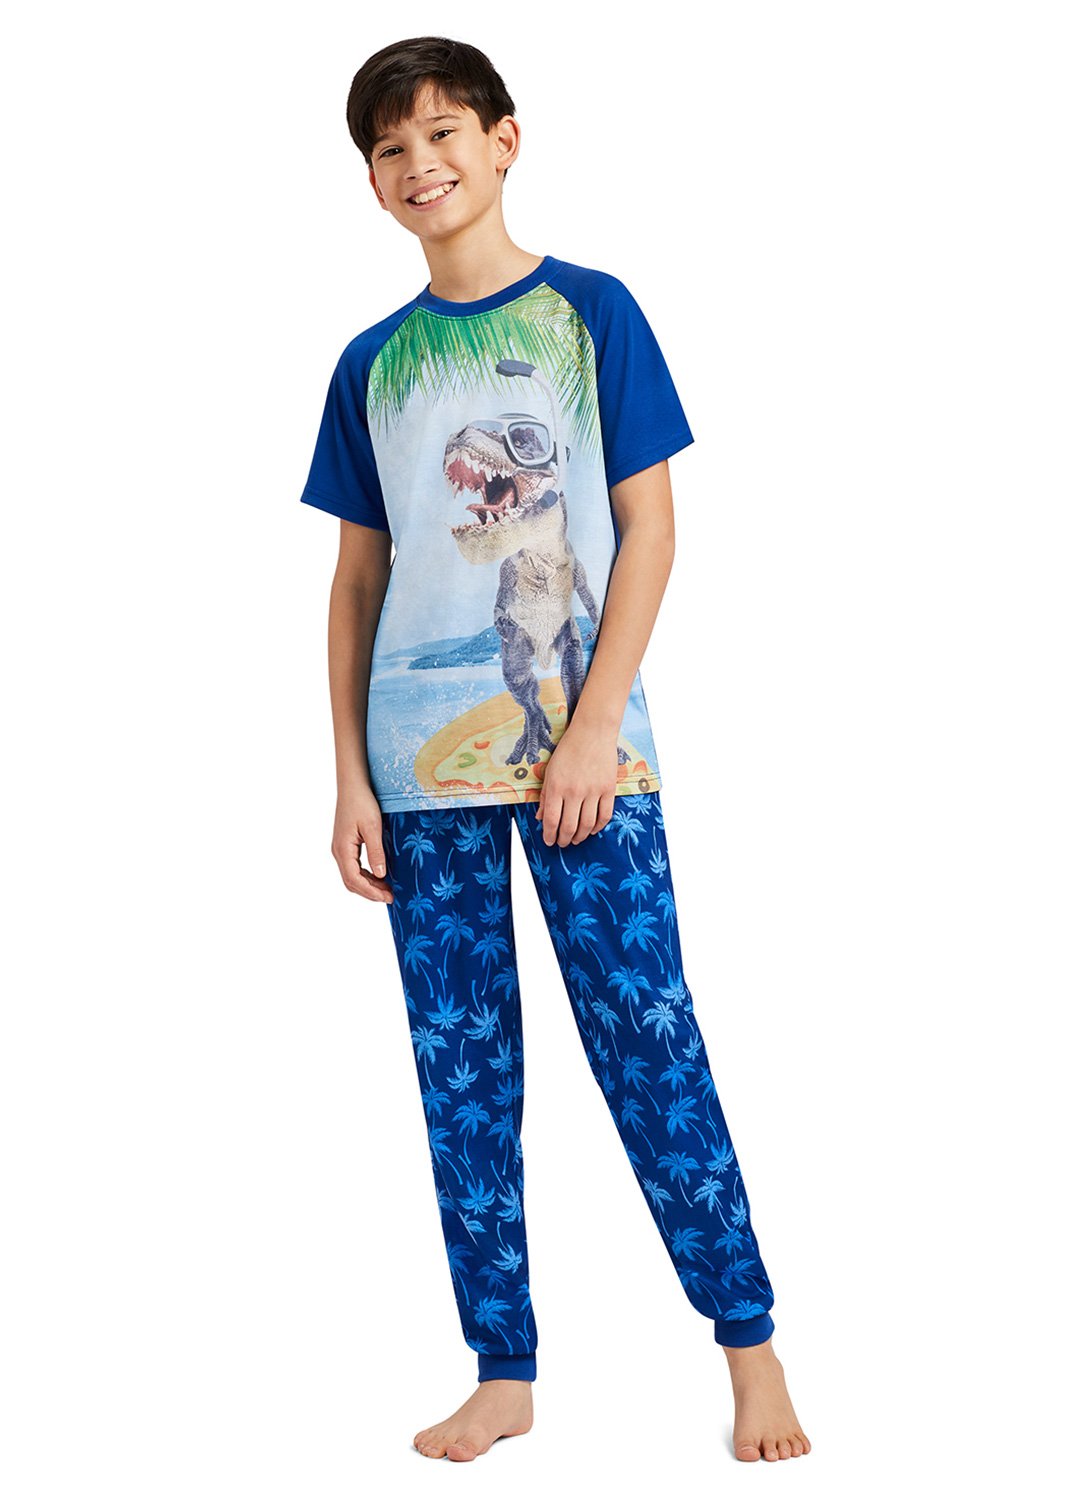 Boy with print Dino and Pizza 2-Piece Pajama Set